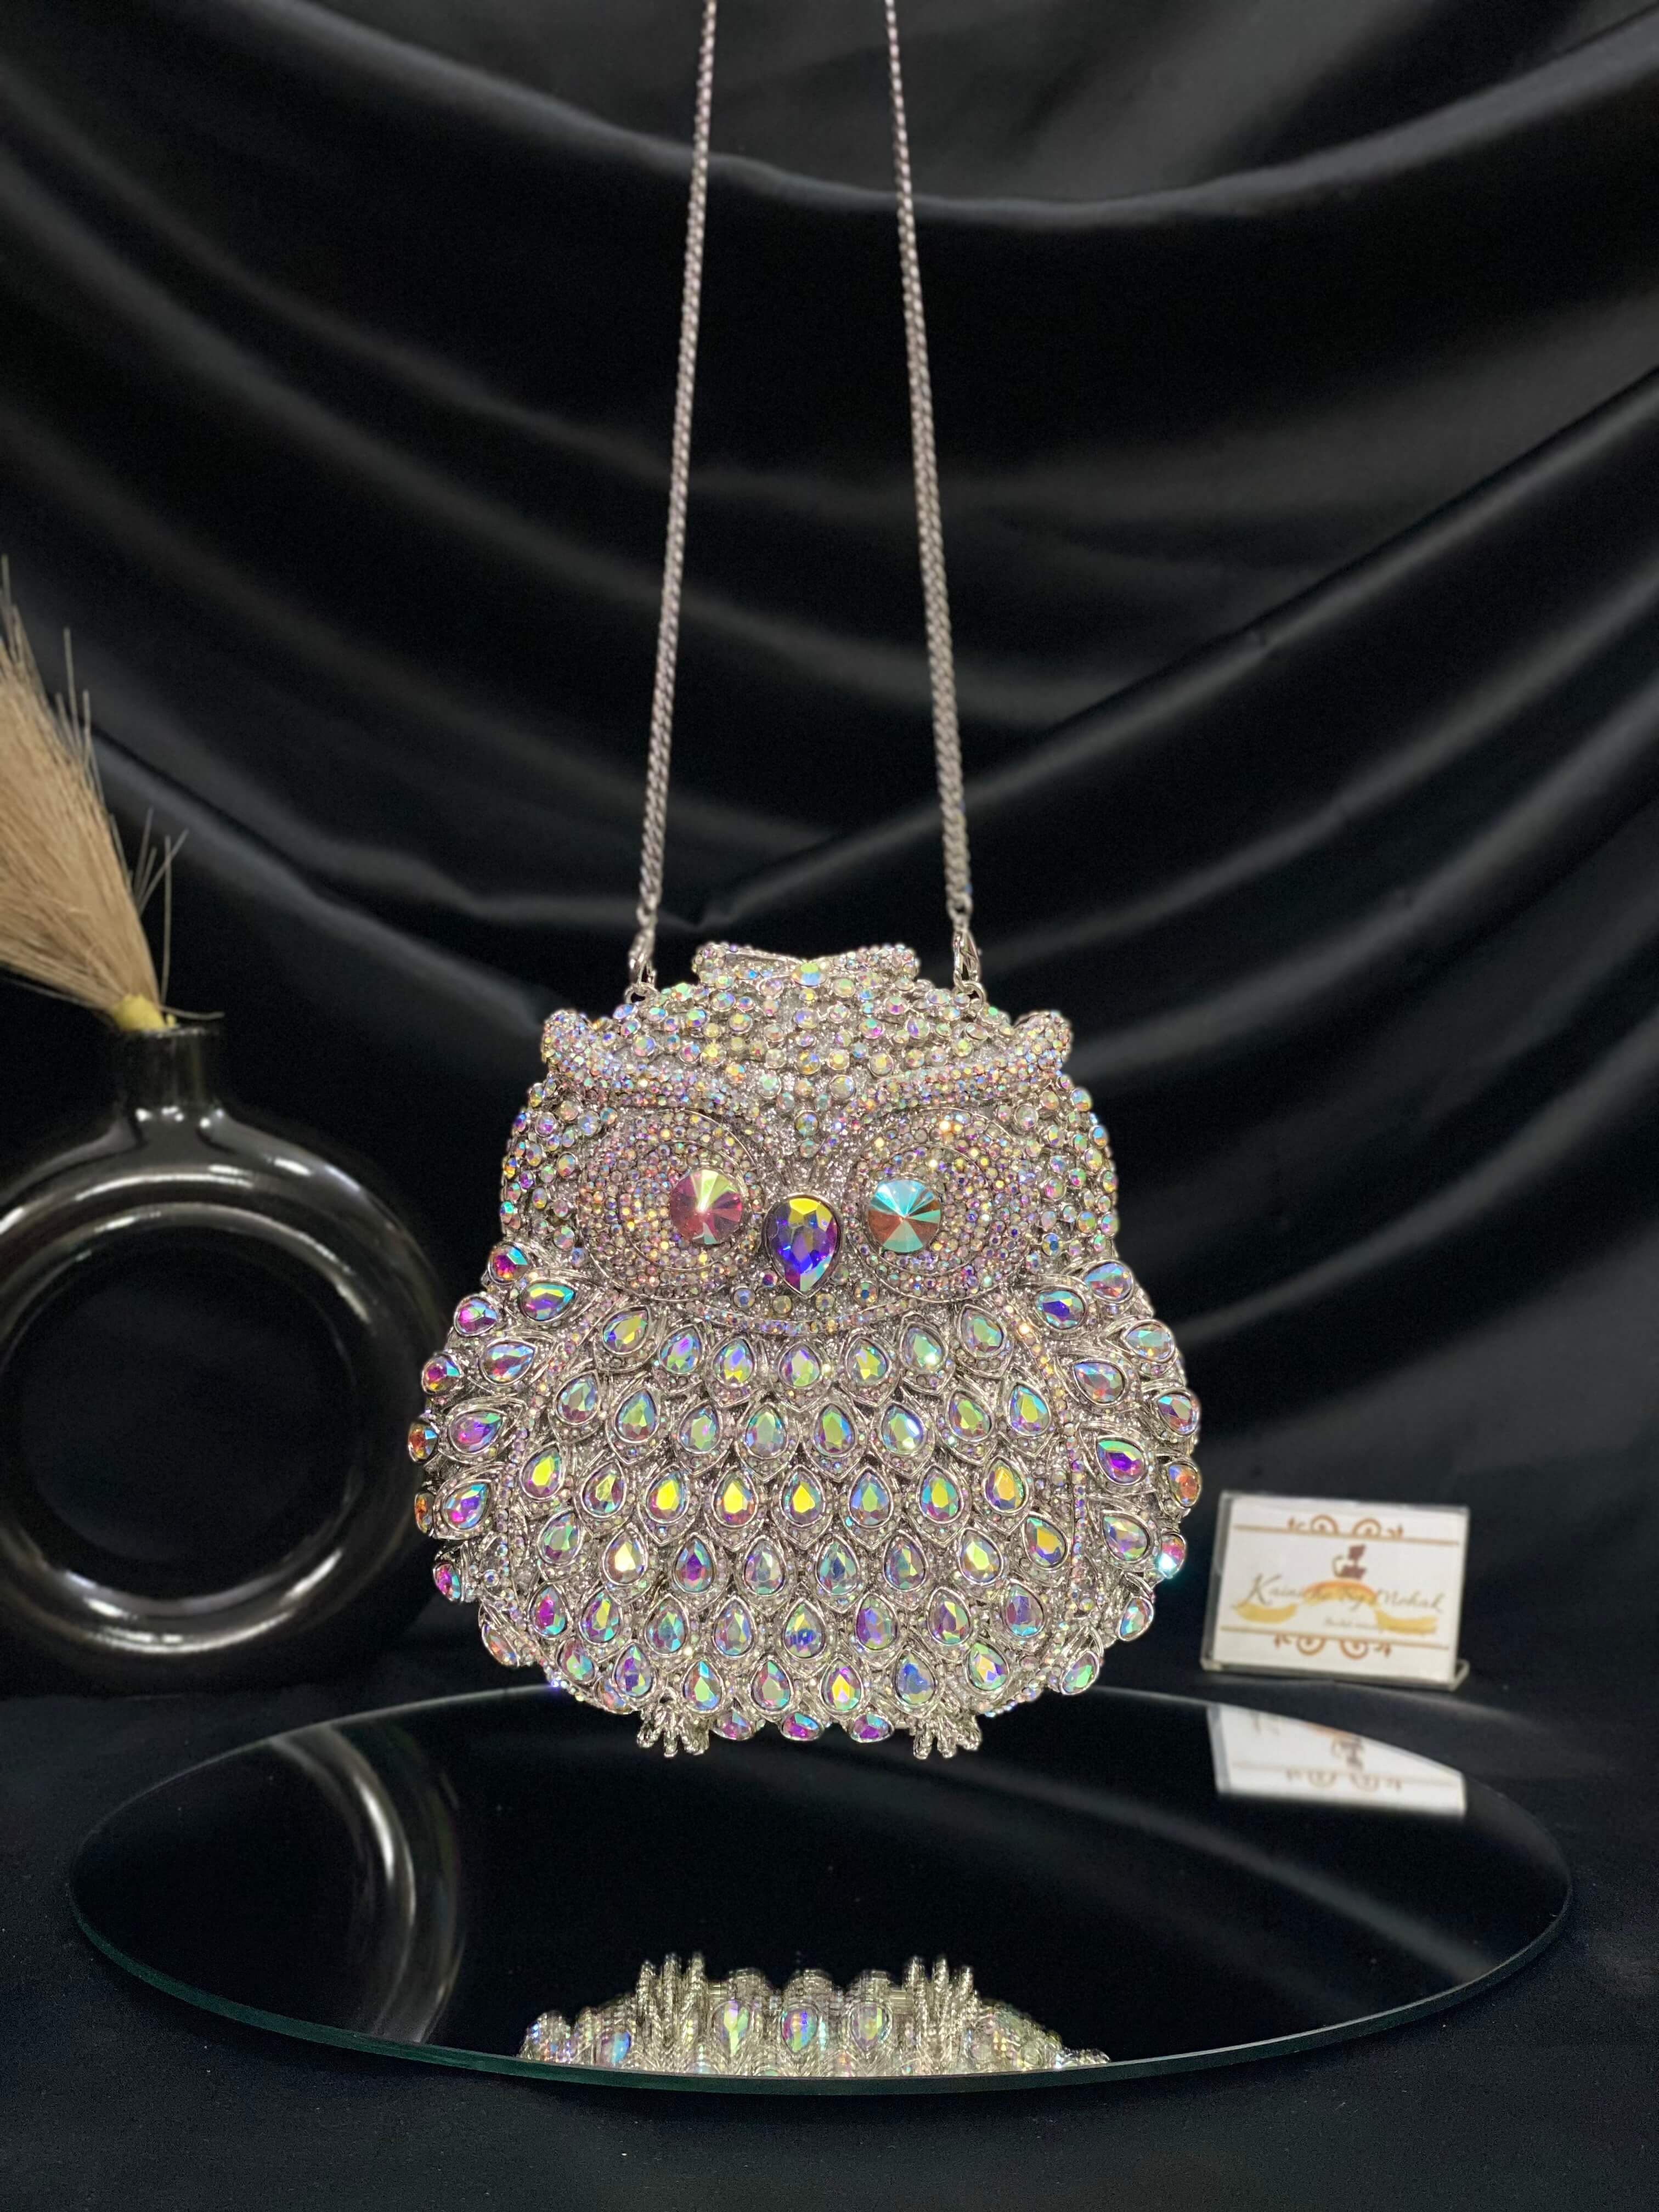 Judith Leiber New York Swarovski Crystal Minaudiere Clutch Purse Evening  Handbag